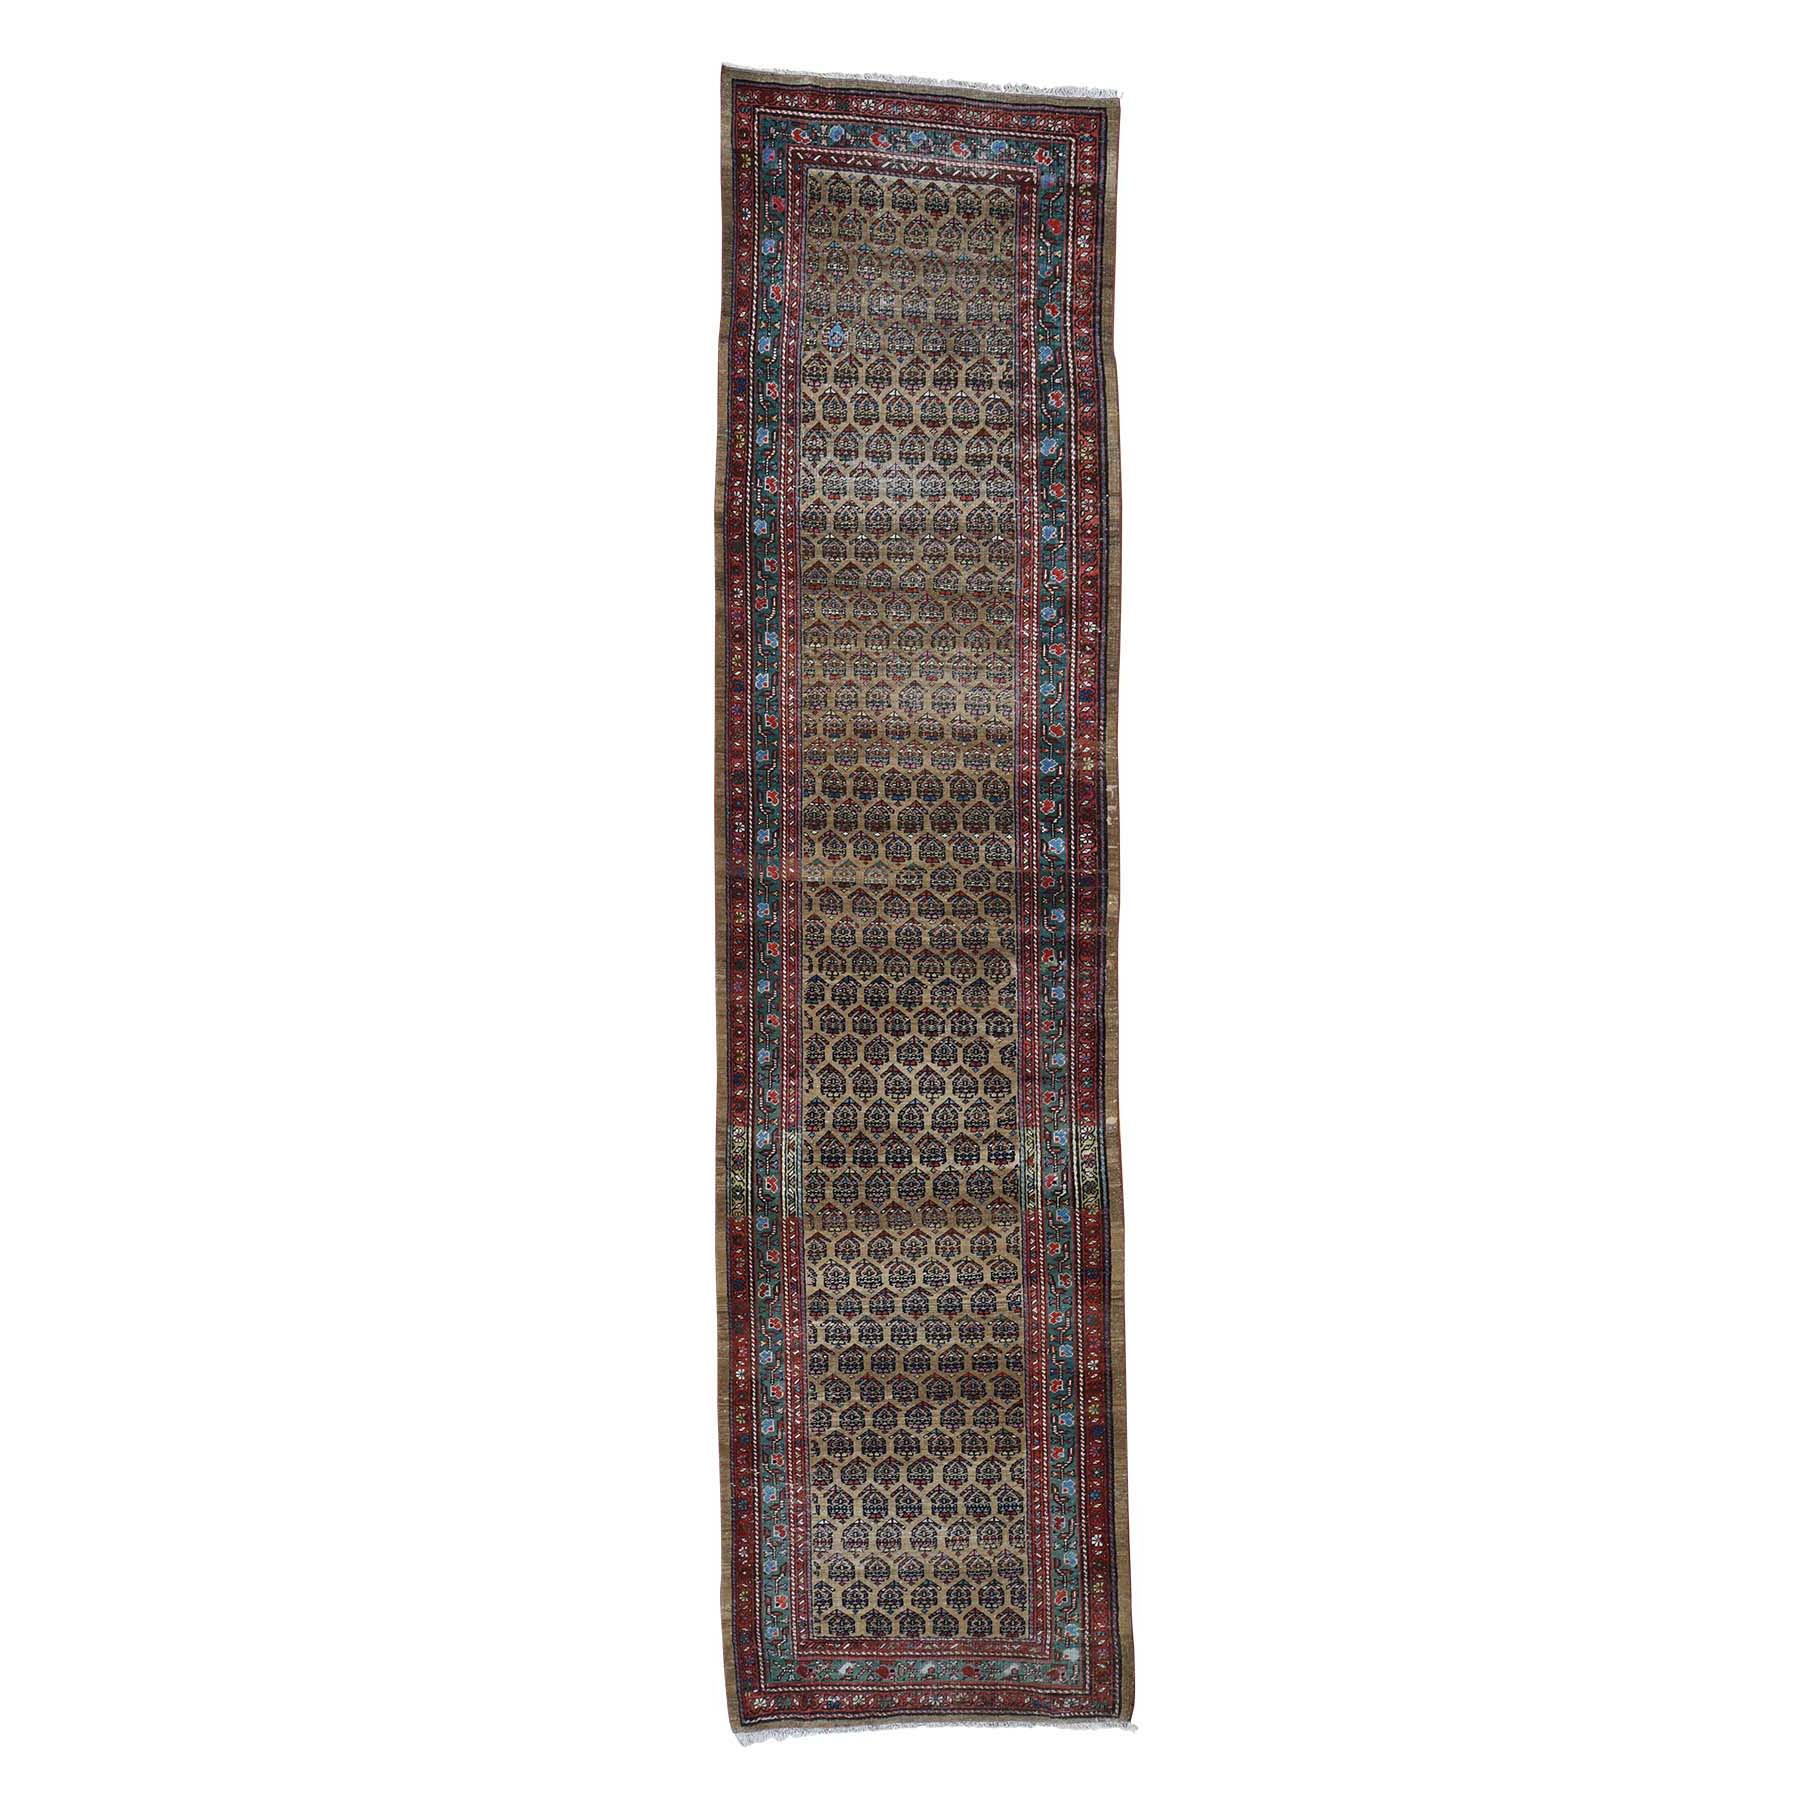 3'3"x13' Antique Persian Serab Worn Pile camel Hair Some Wear Runner Hand Woven Oriental Rug 